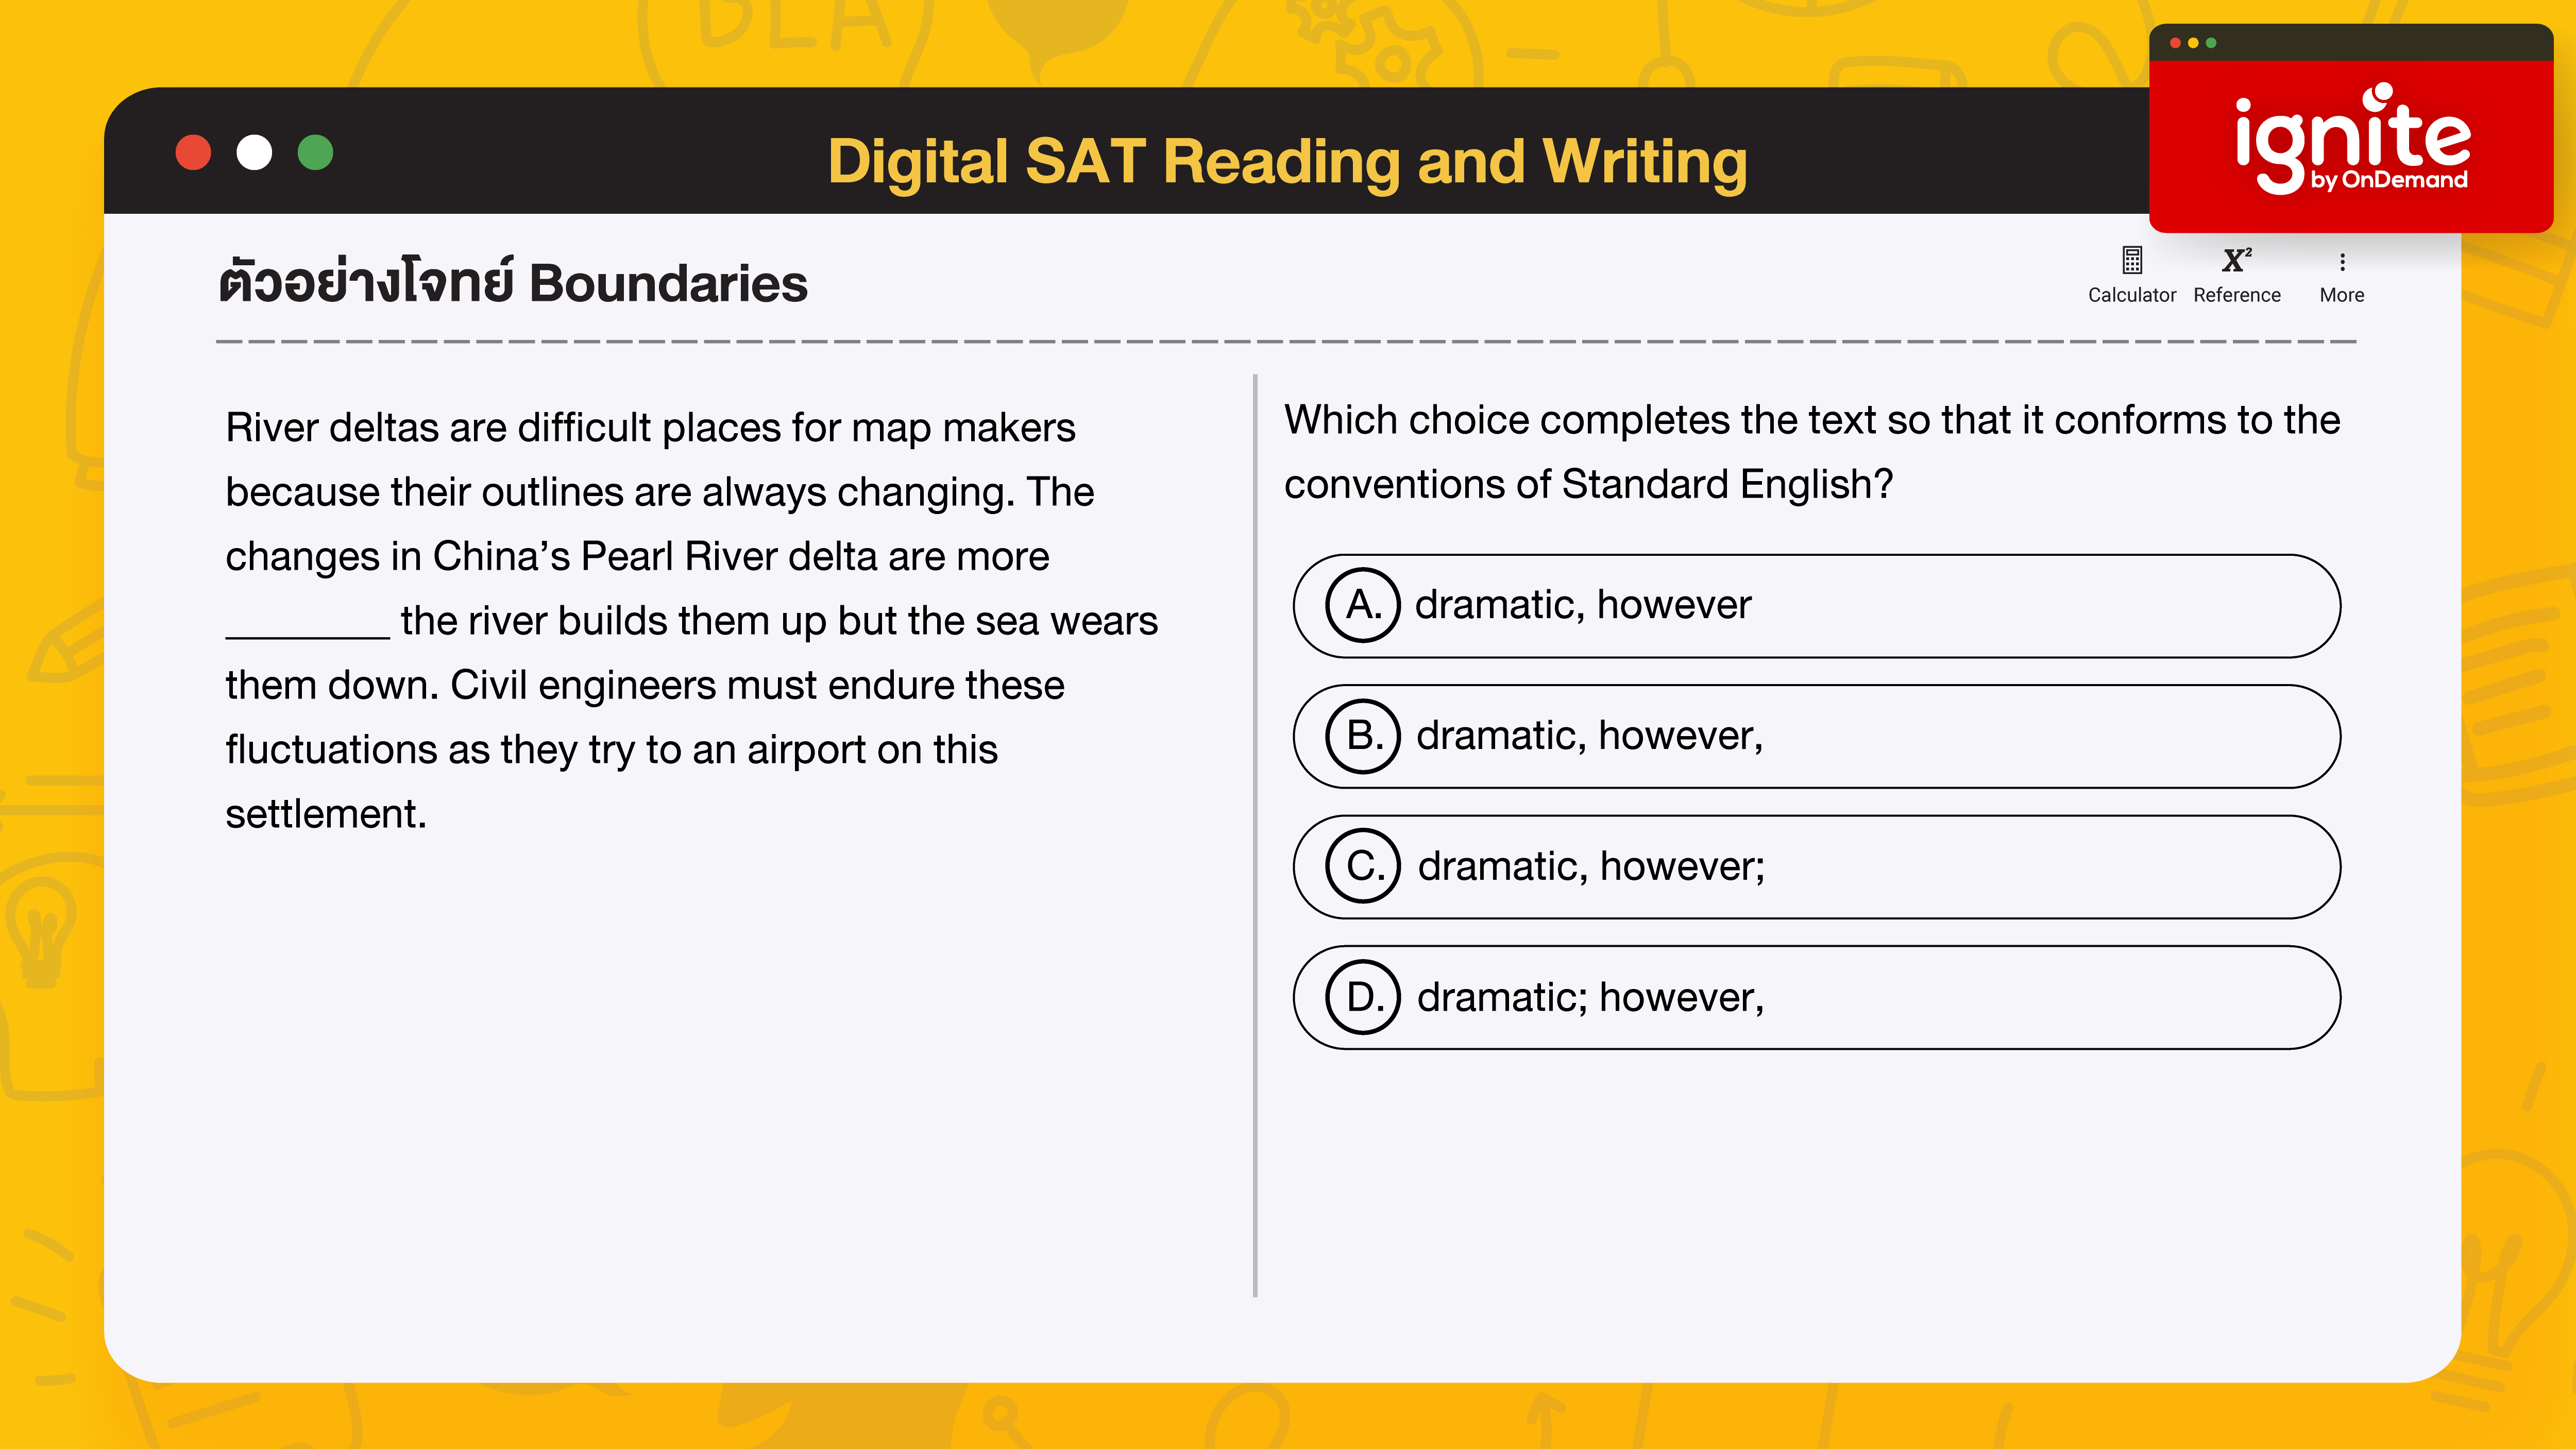 Boundaries - Digital SAT Reading and Wrting 2023 - ignite by OnDemand